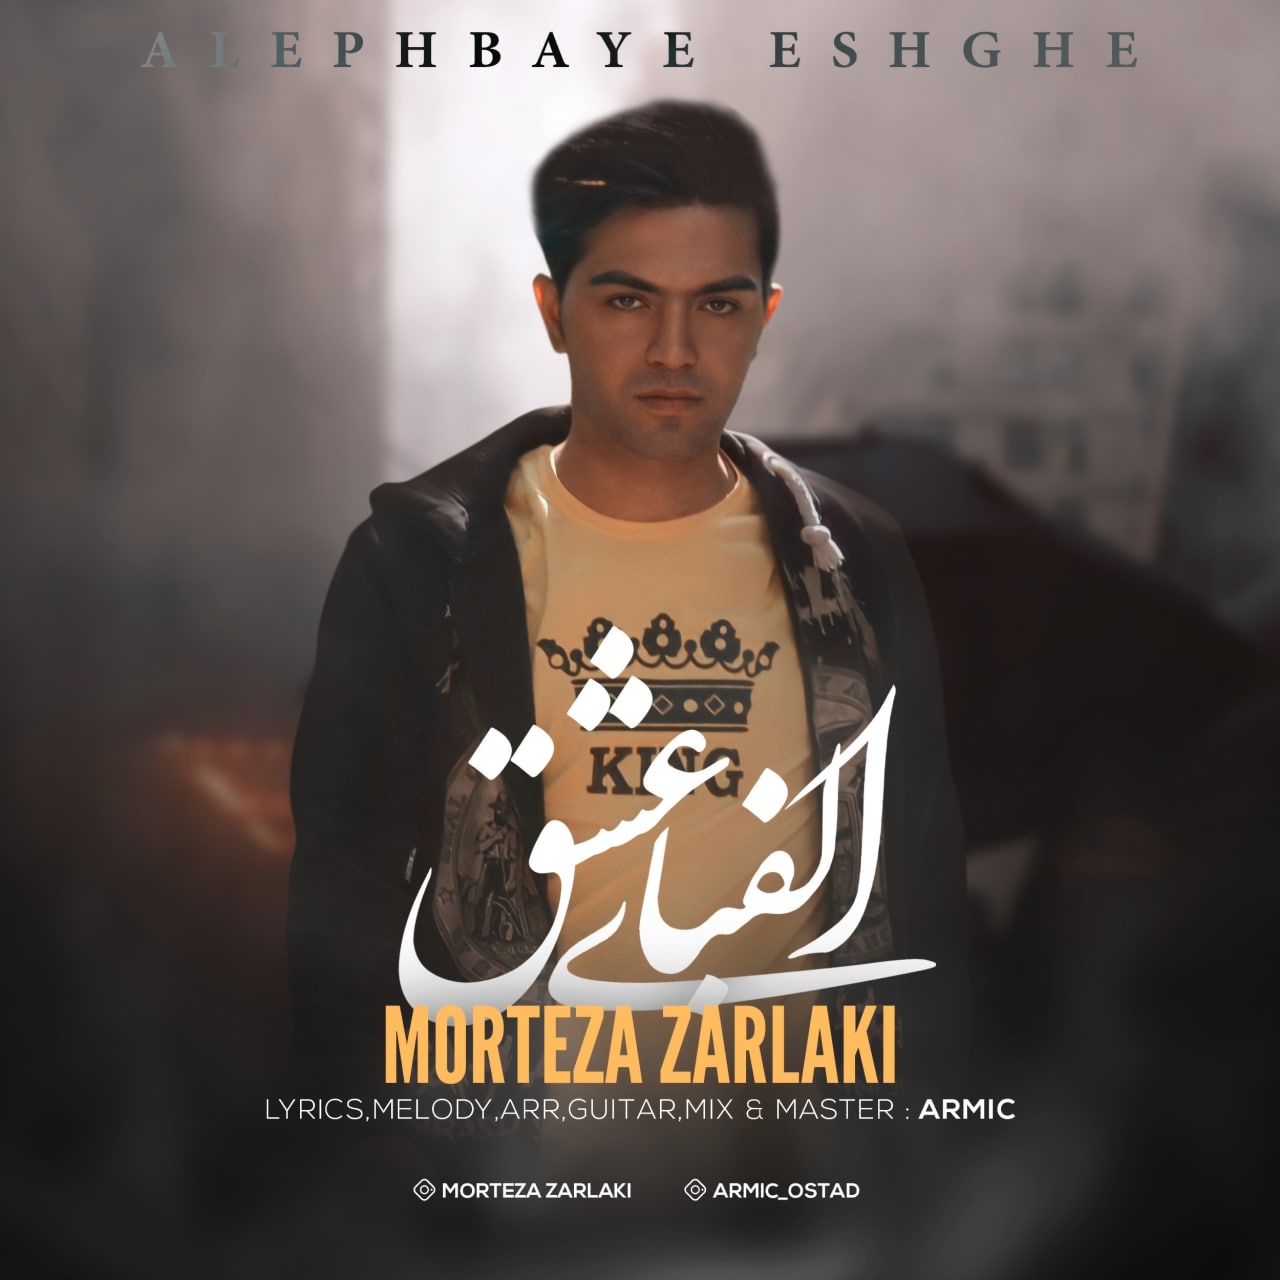 Morteza Zarlaki – Alephbaye Eshgh